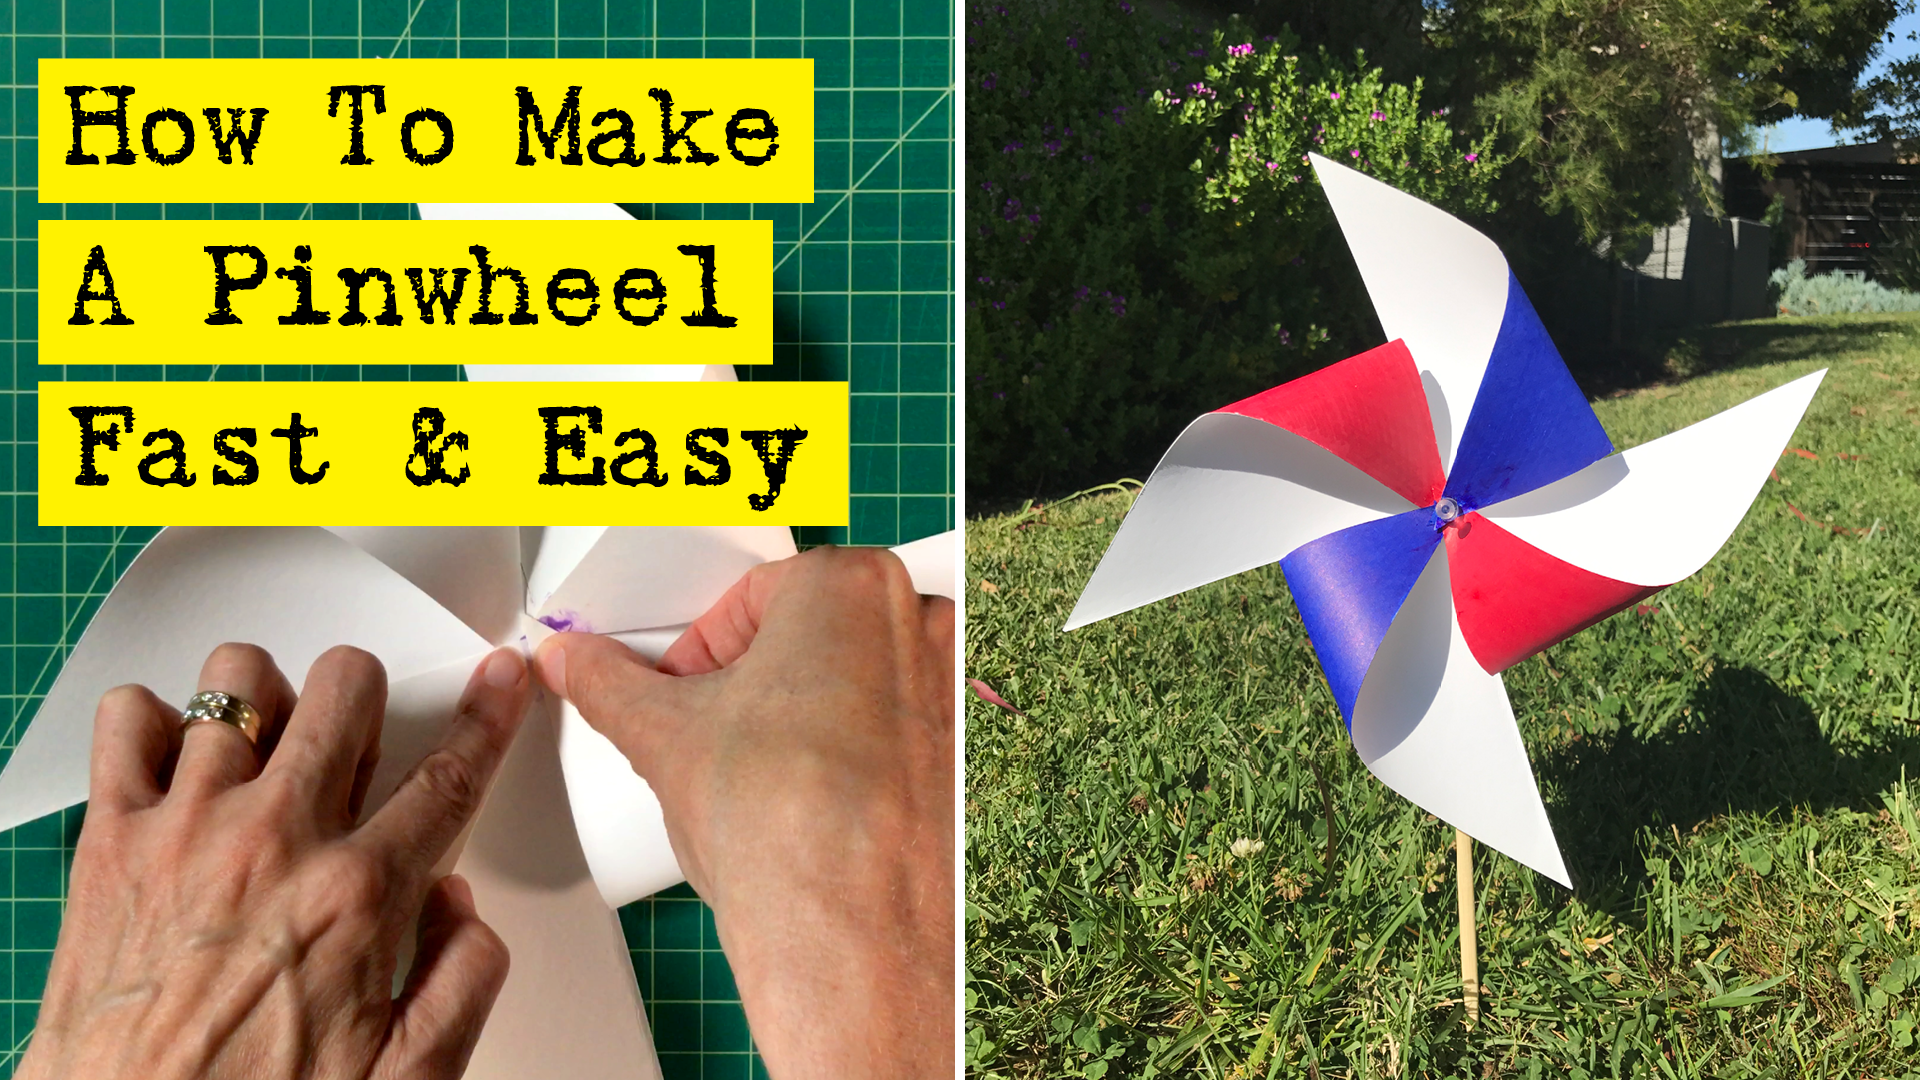 How To Make A Pinwheel by DIY Presto!